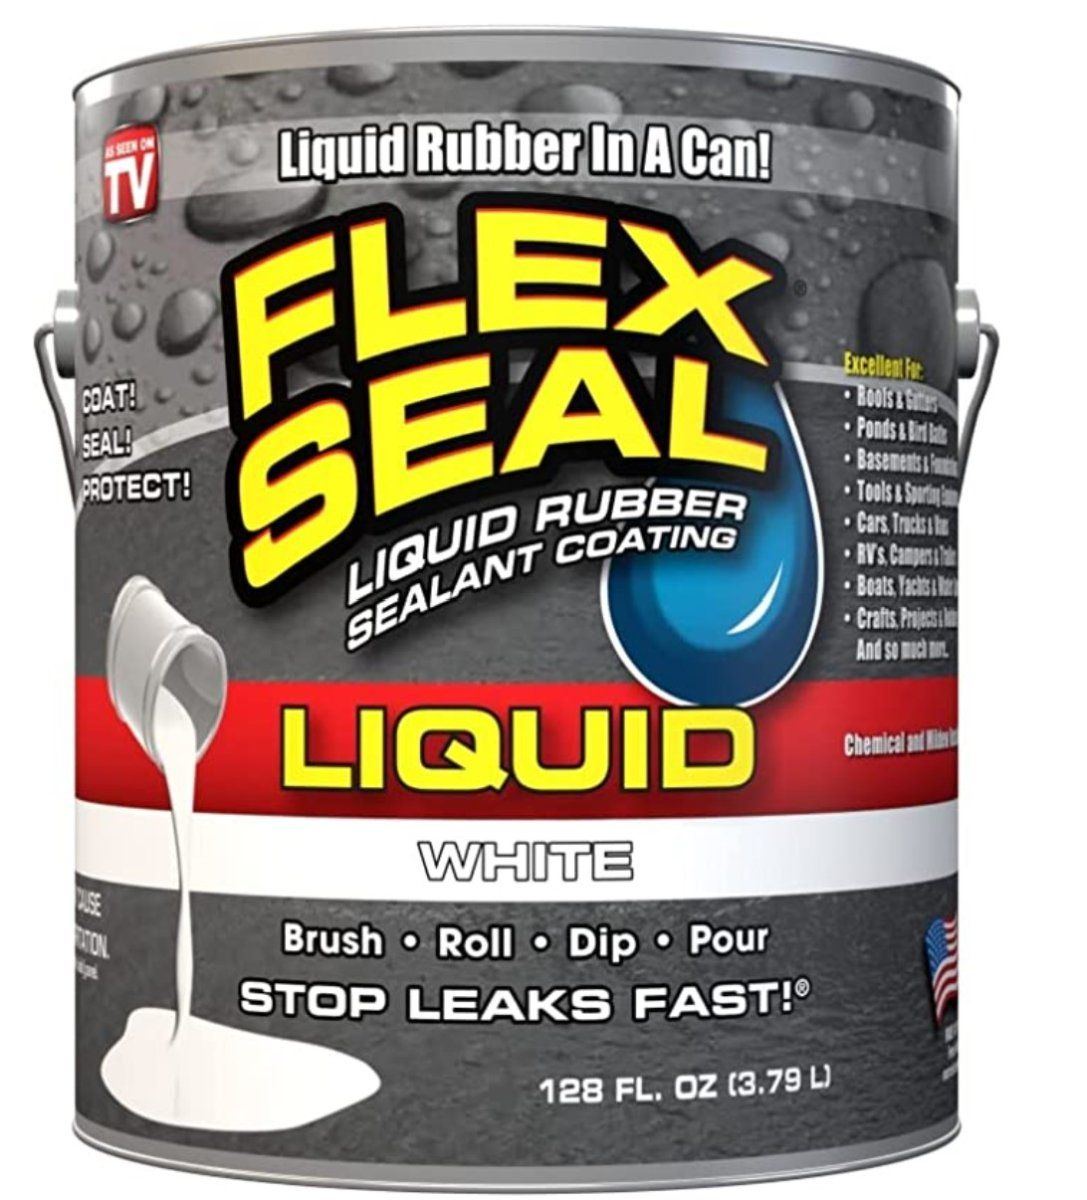 Flex seal